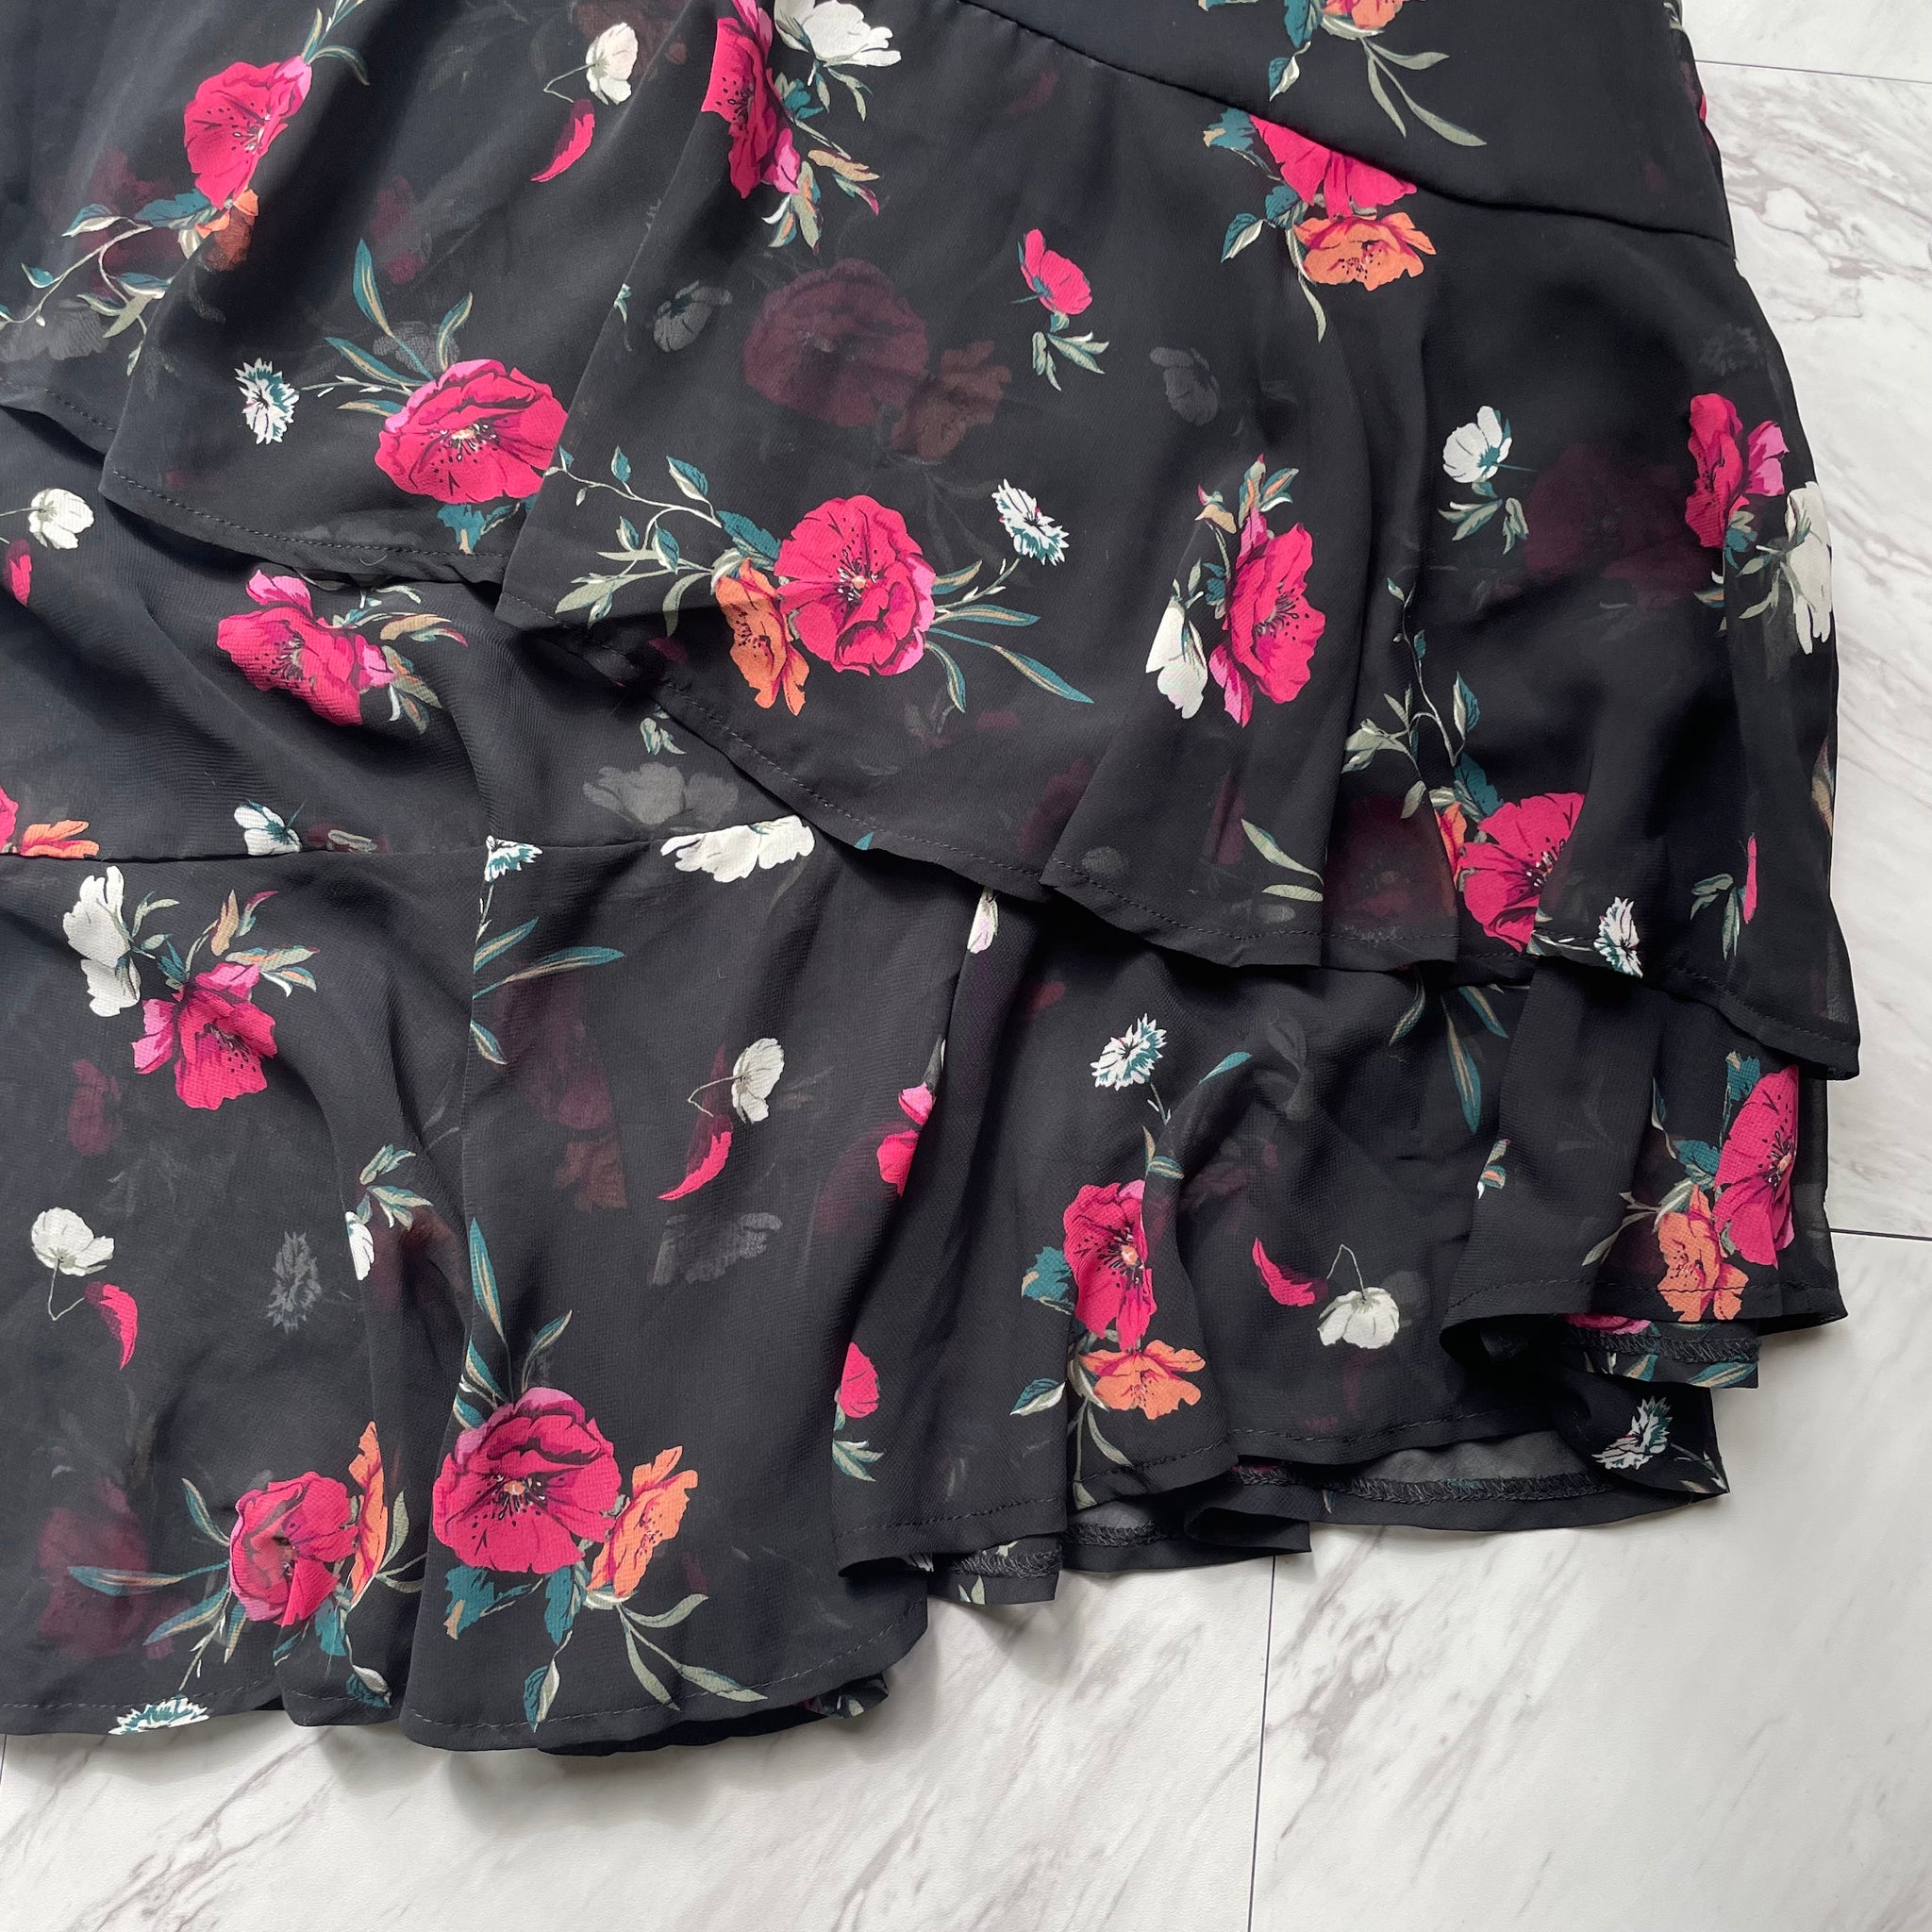 NEW asymmetrical floral skirt, Size 6